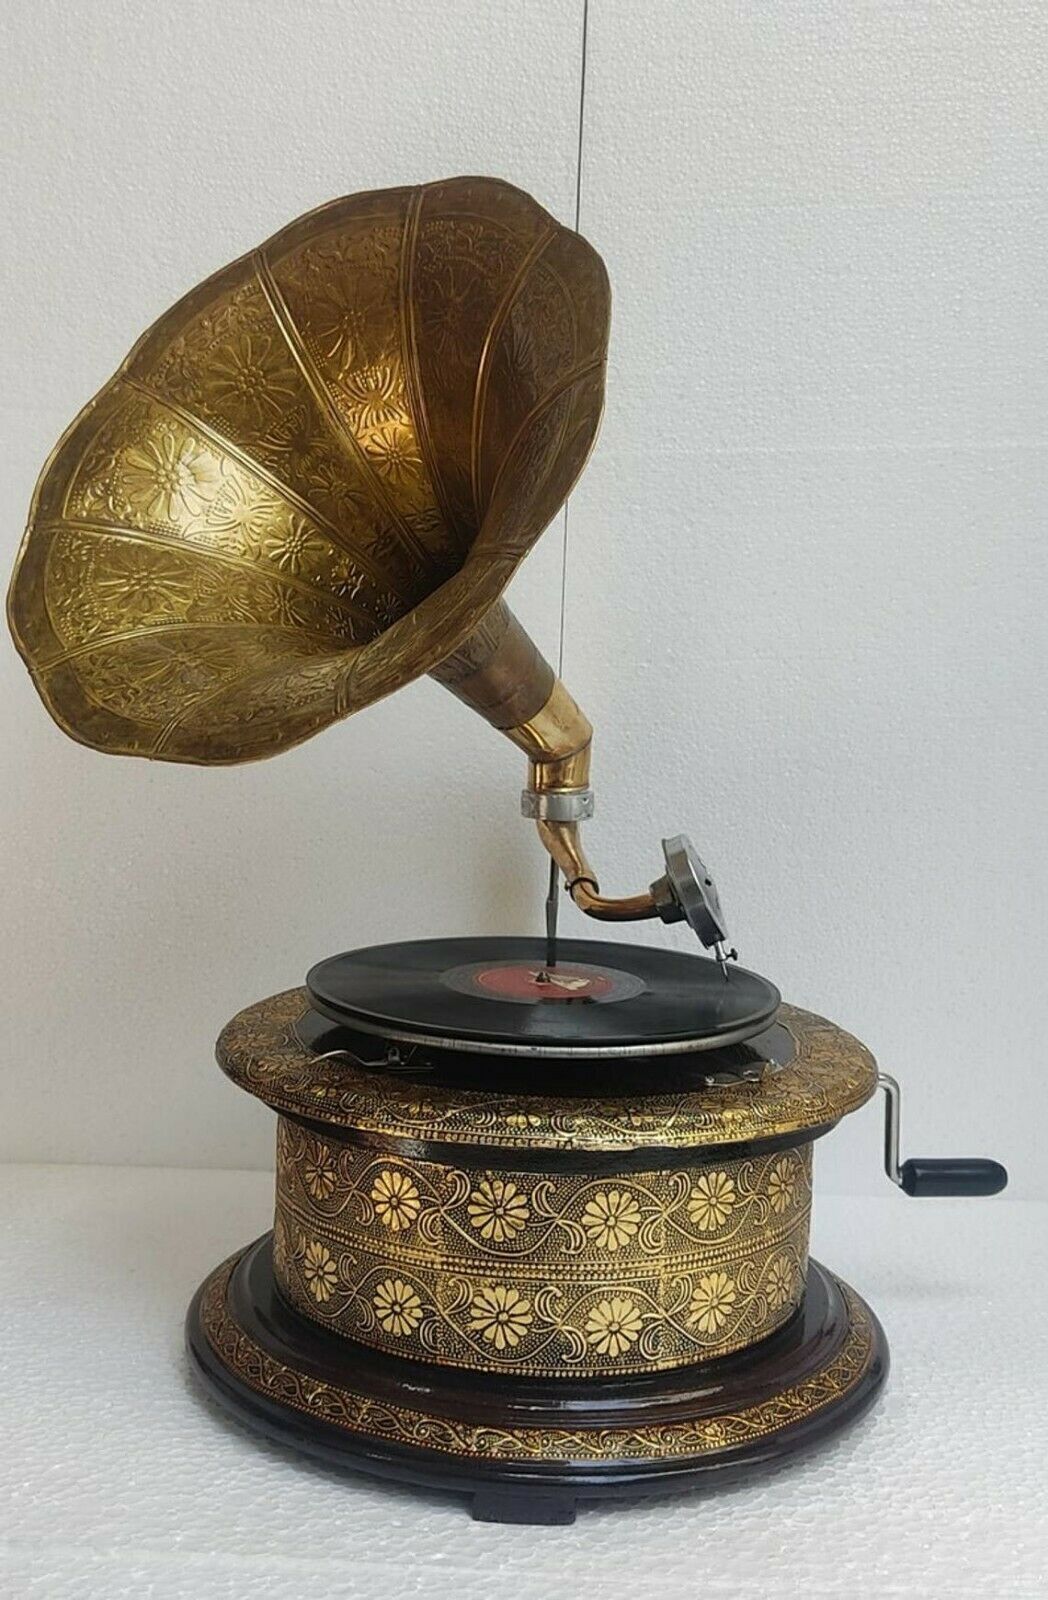 Old Model antiqueWorking Gramophone Vintage Gramophone Player Phonograph